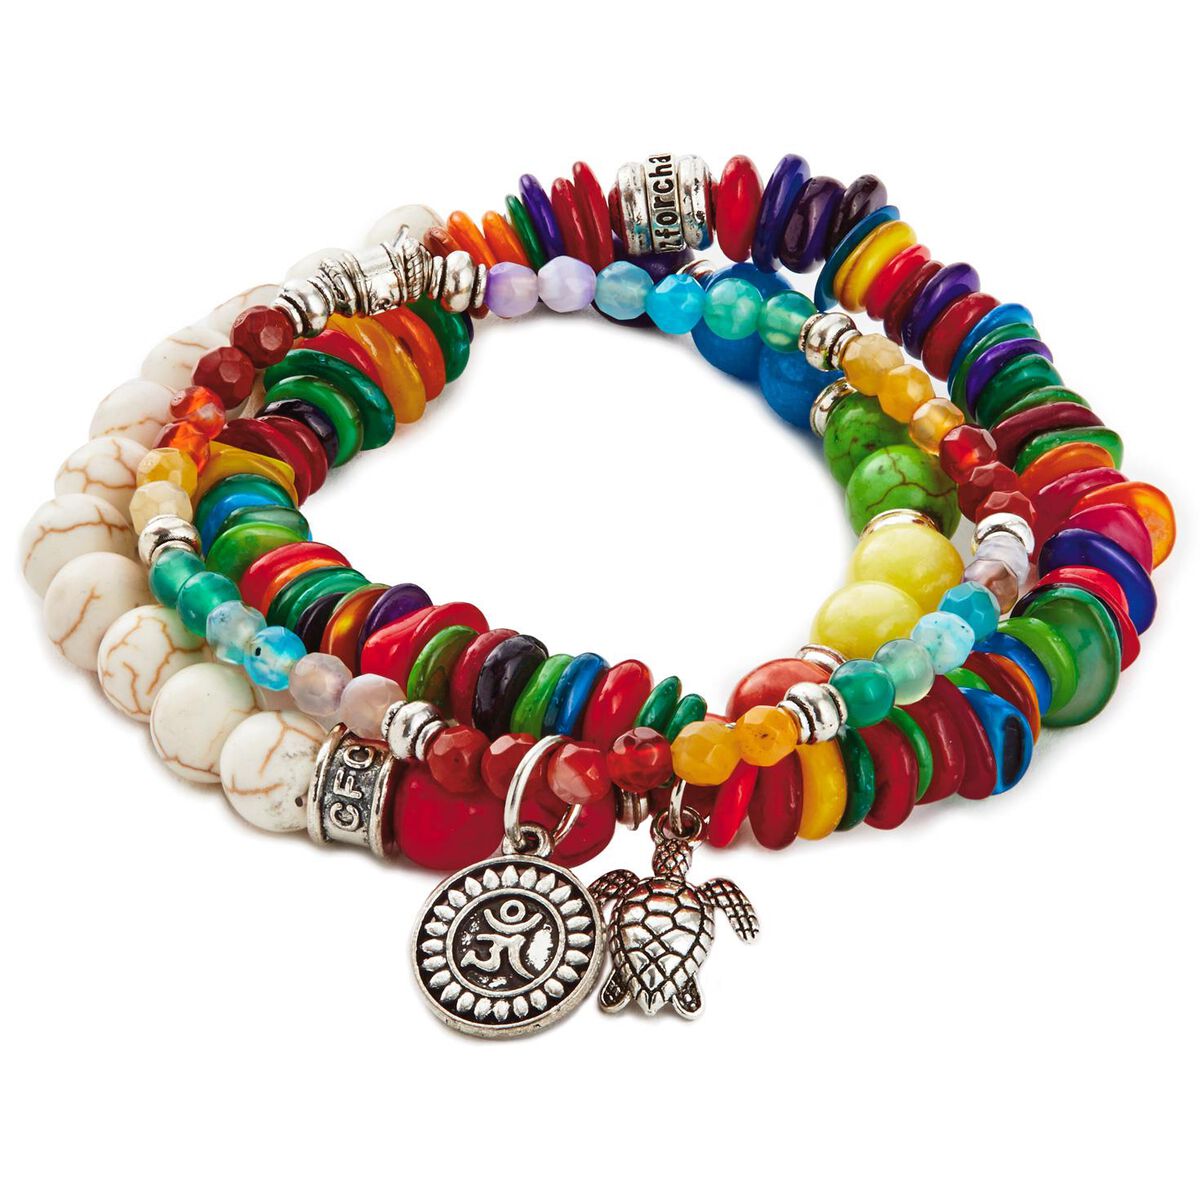 Chavez for Charity Bracelet Set, Tranquility - Jewelry - Hallmark